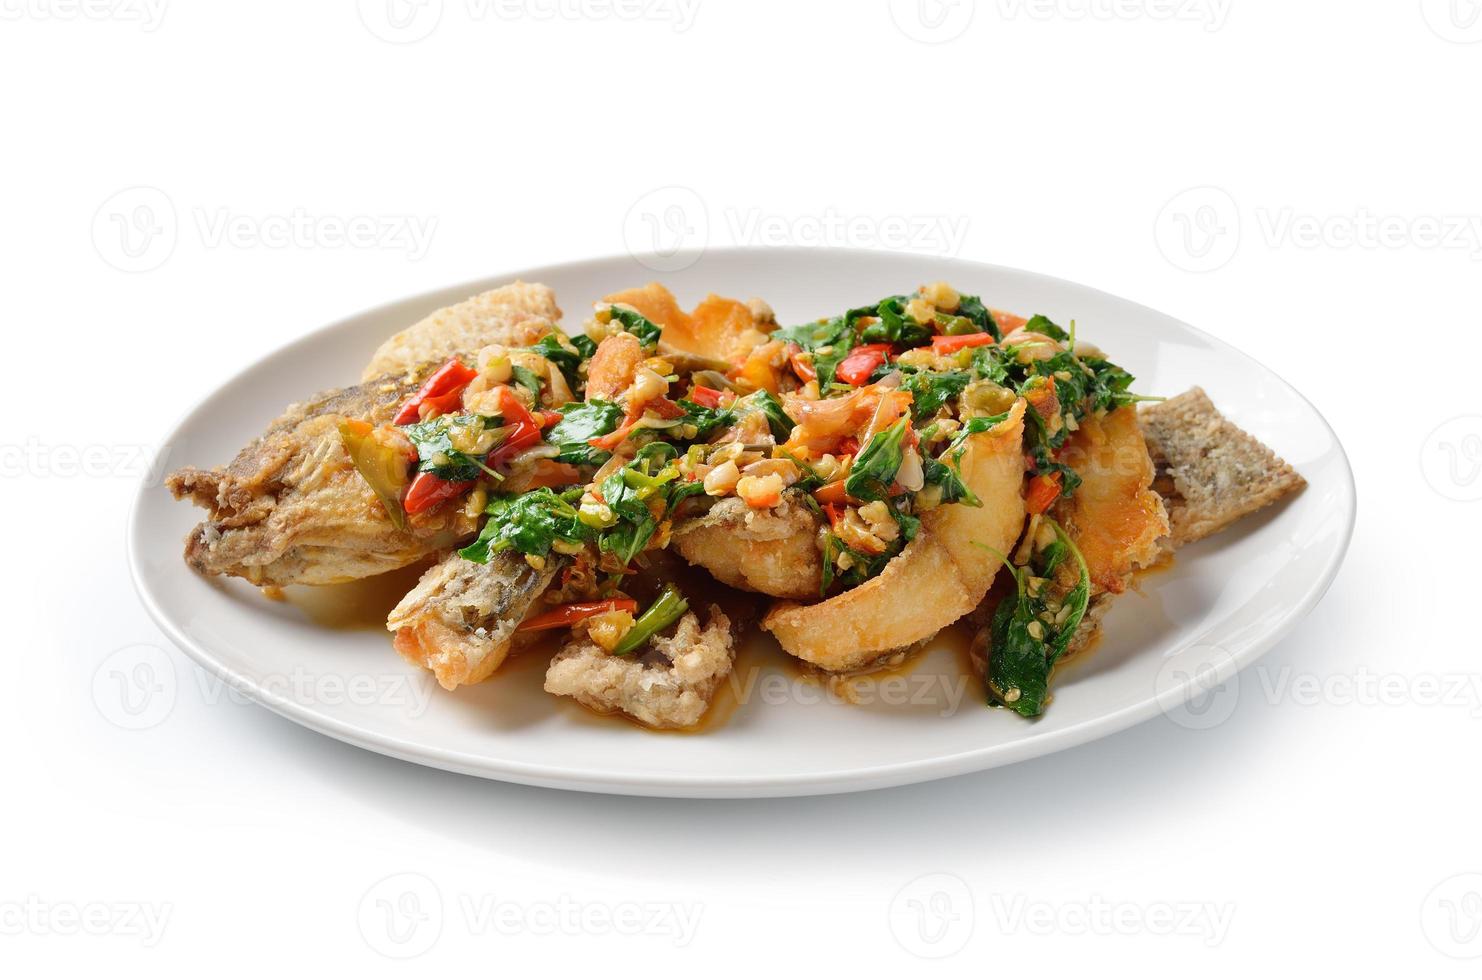 peixe frito com pimenta e especiarias, estilo de comida deliciosa Tailândia foto